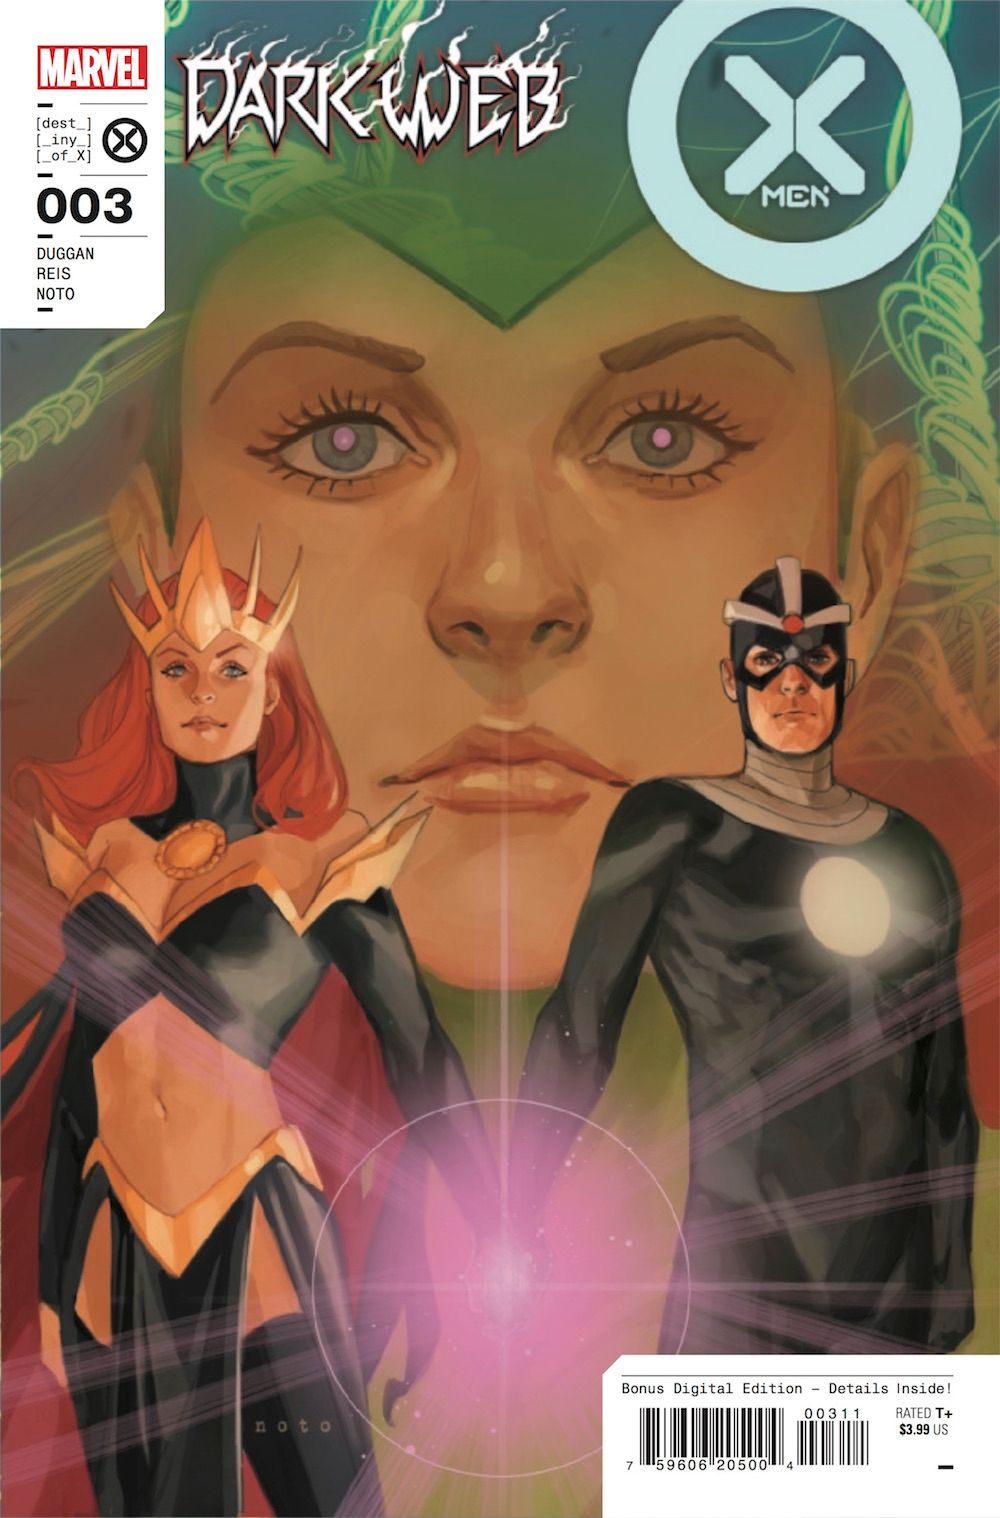 Jean Grey Is Out for Revenge in Marvel's Dark Web: X-Men #3